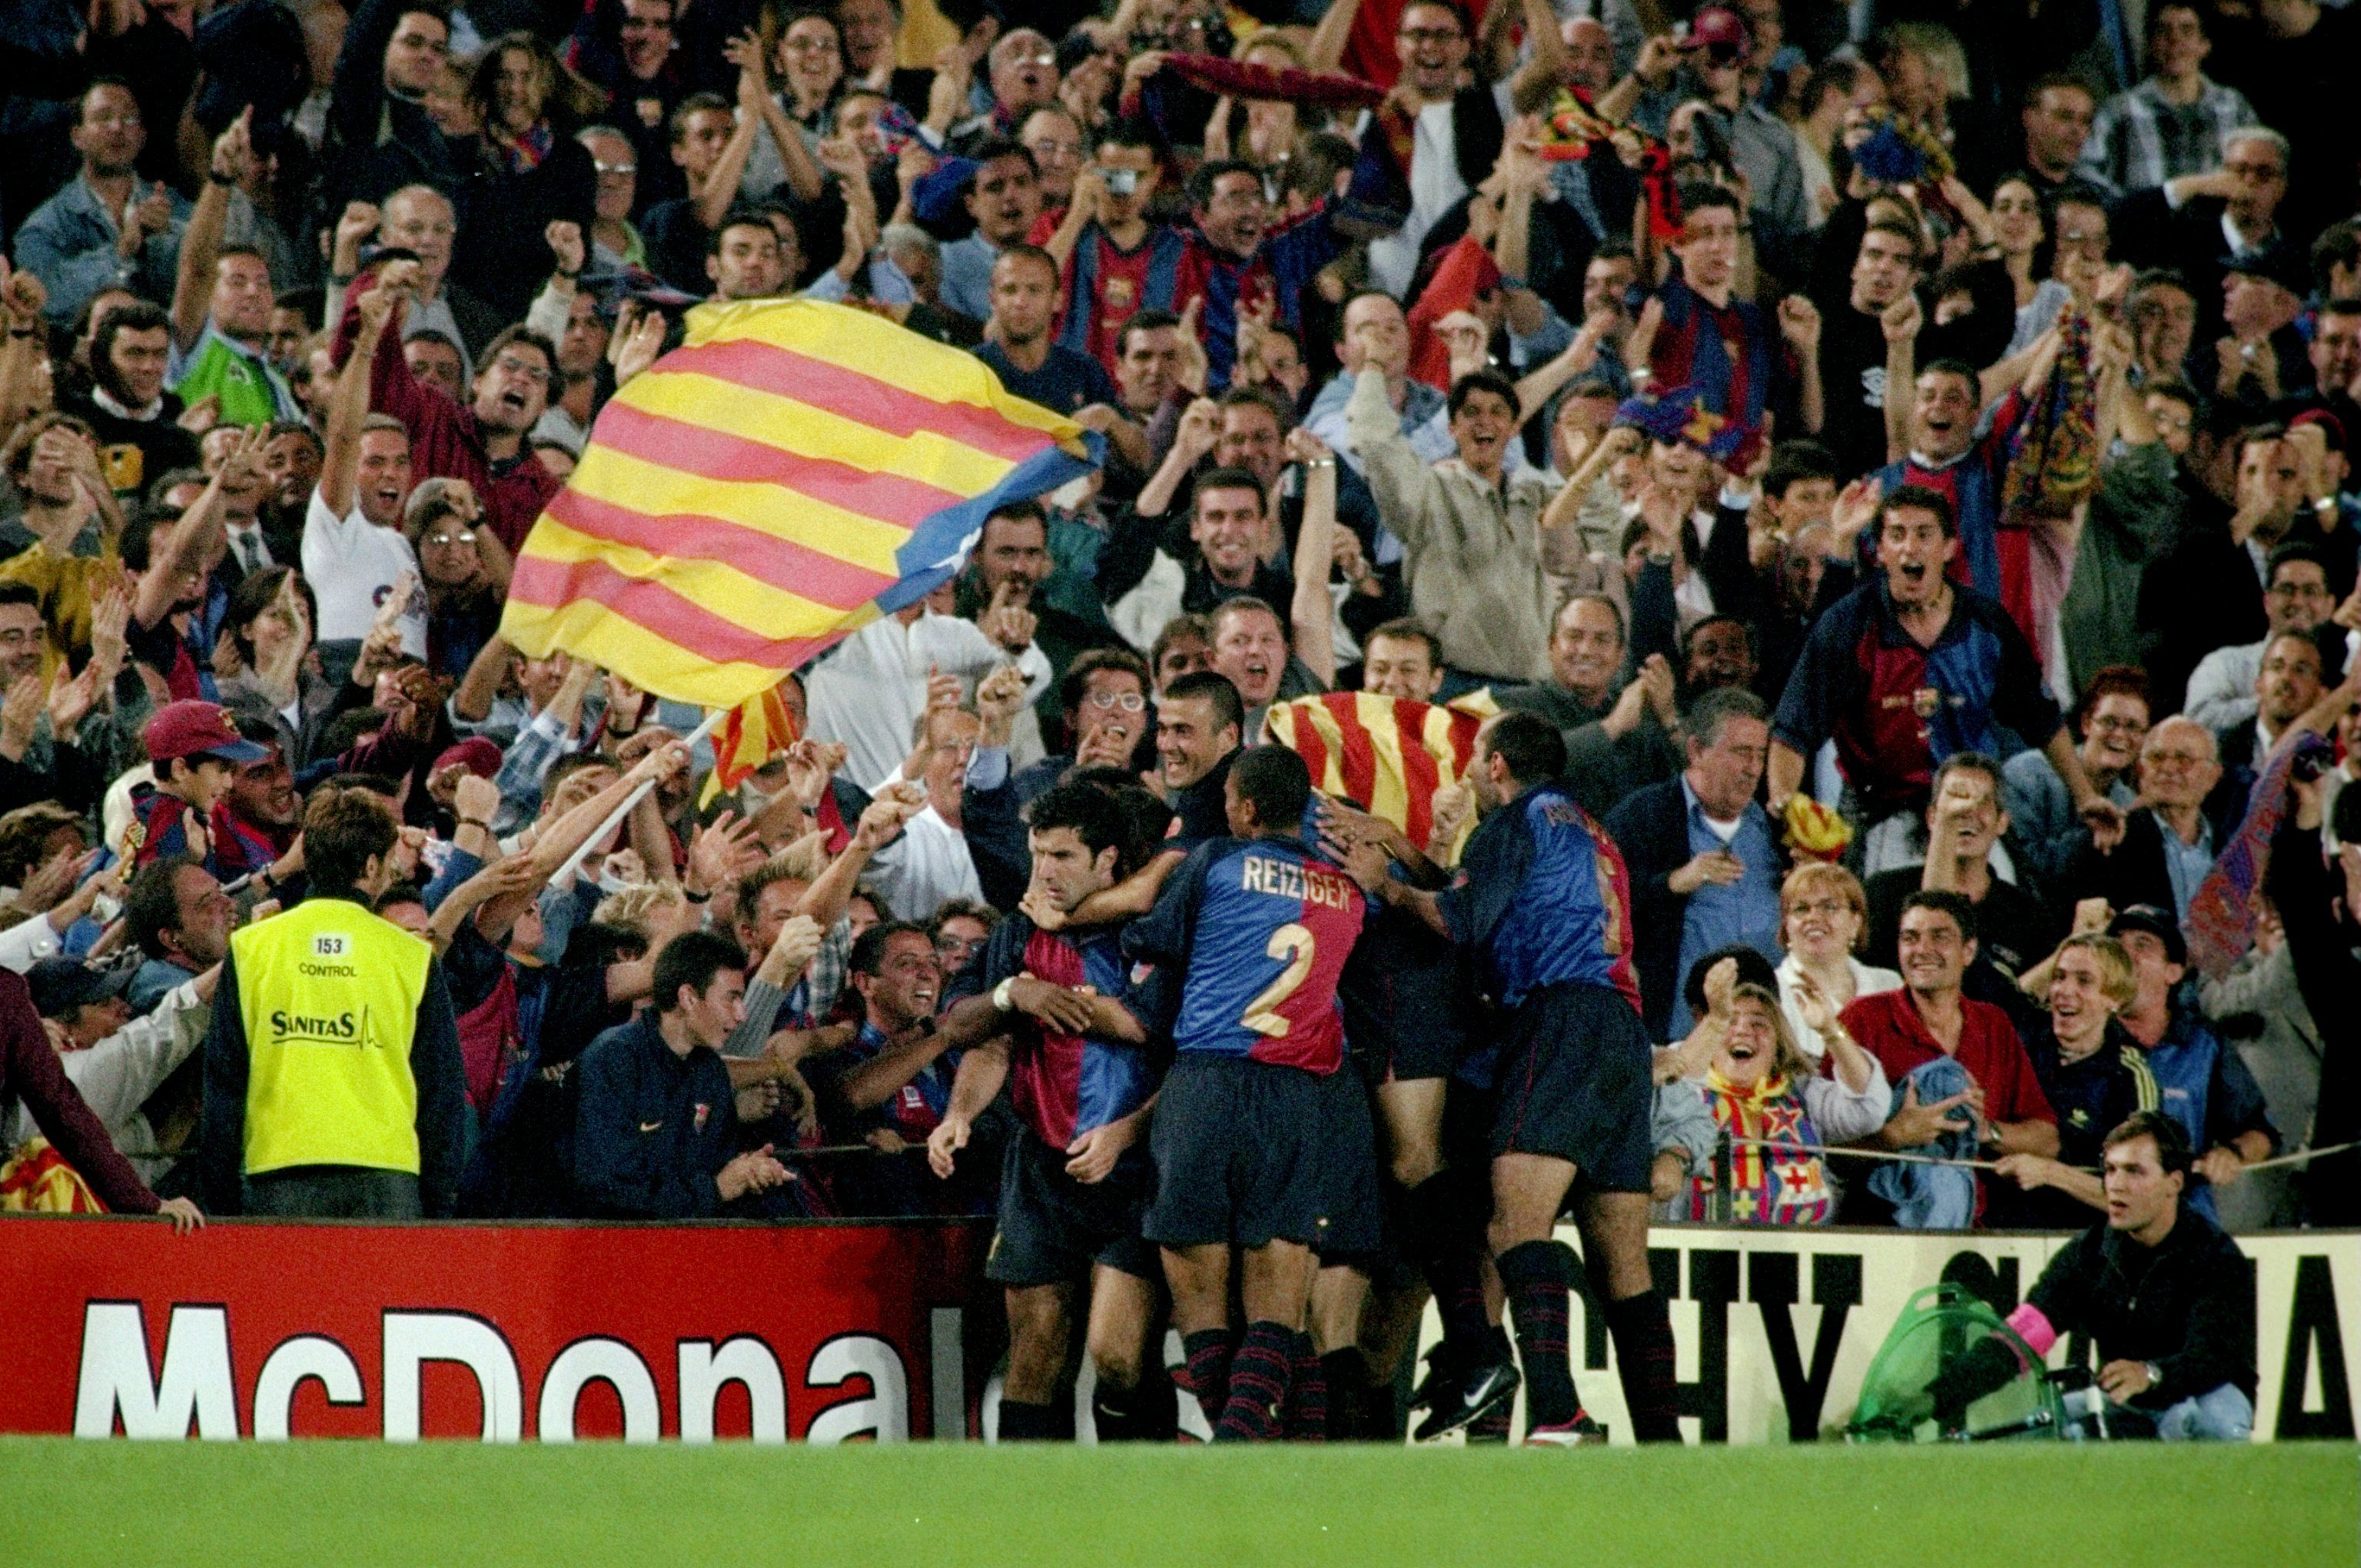 Barcelona celebrate